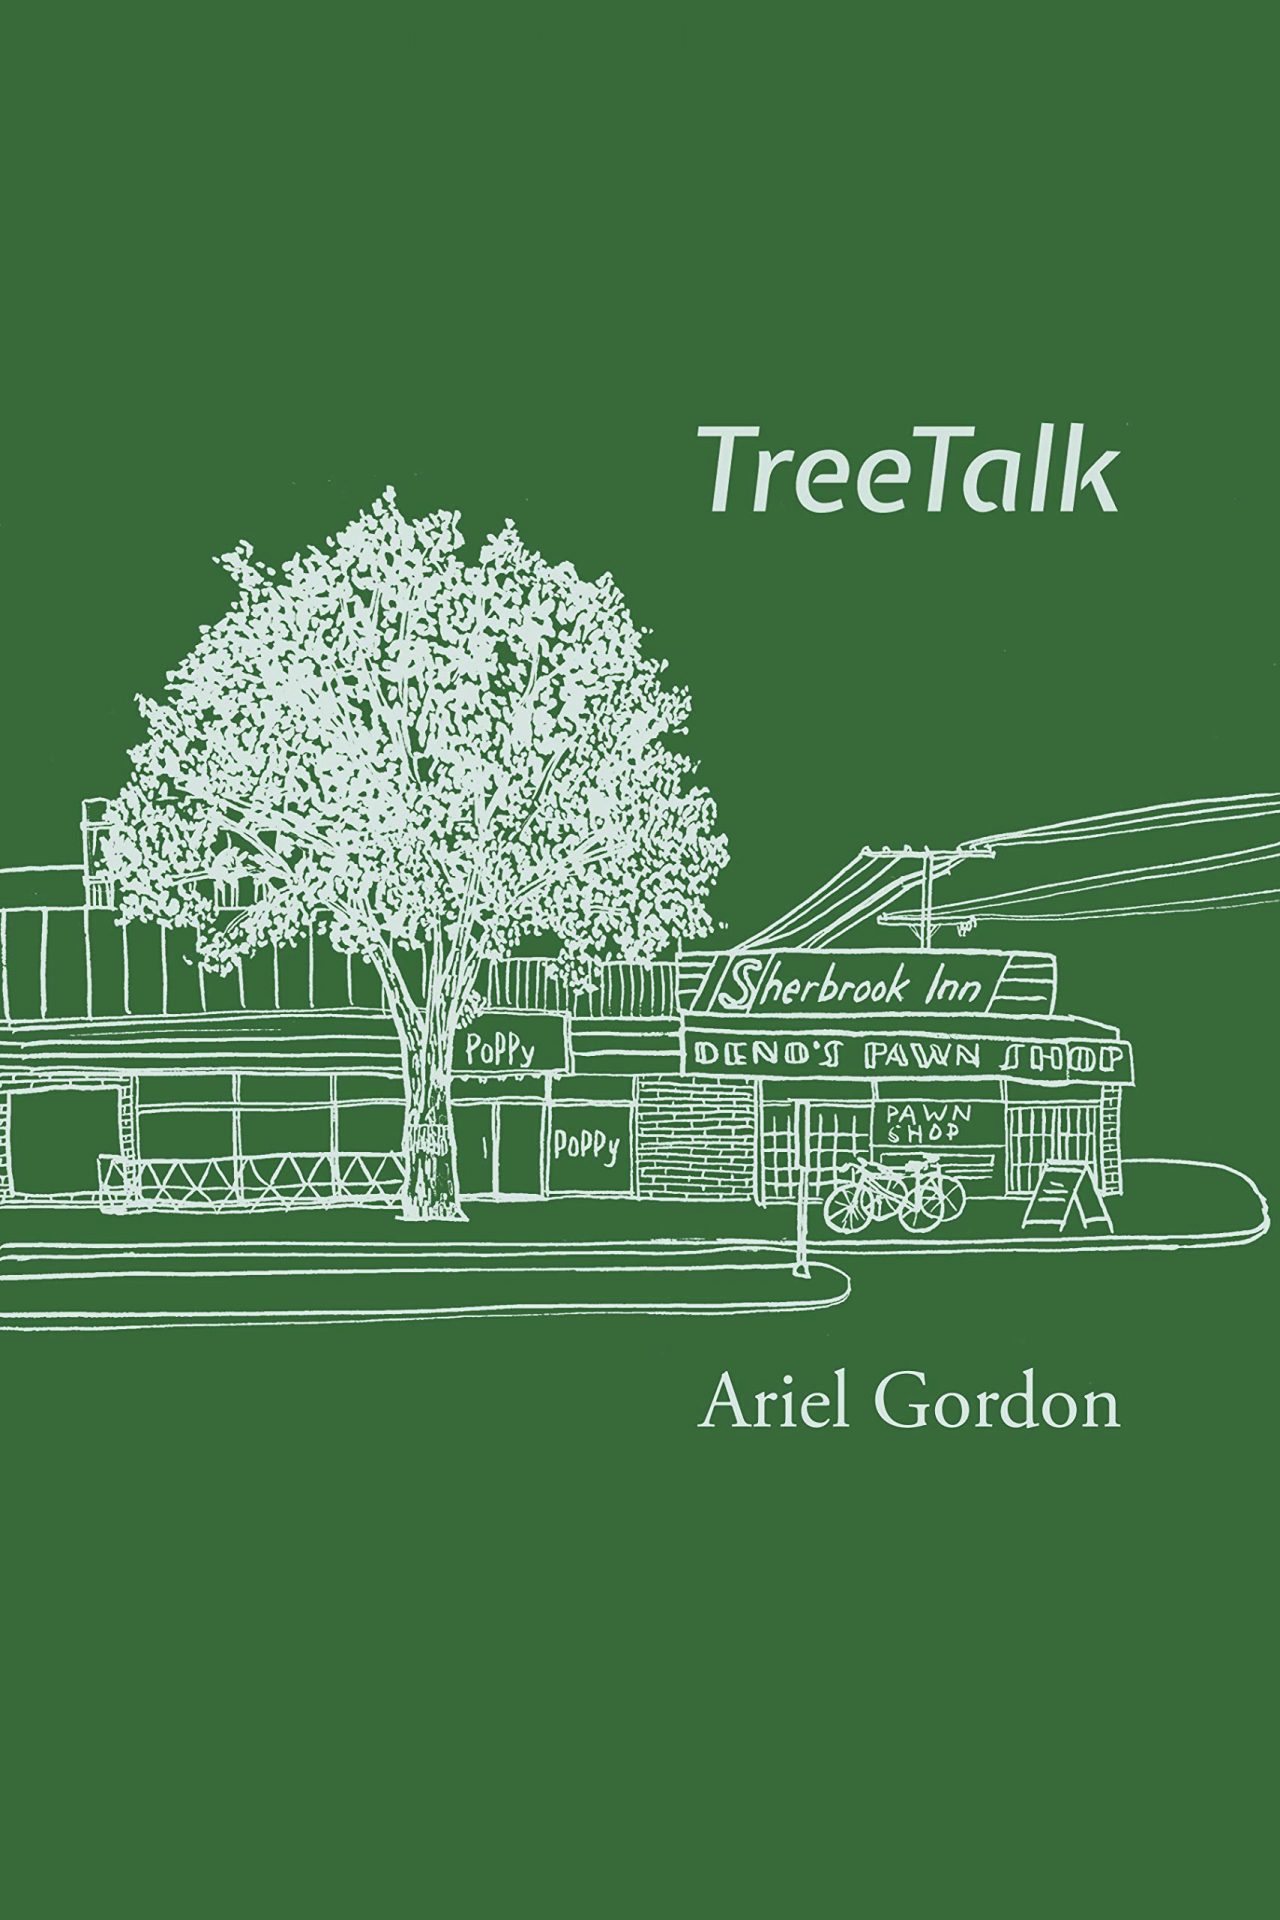 Tree Talk: Environment
by Ariel Gordon (2020)